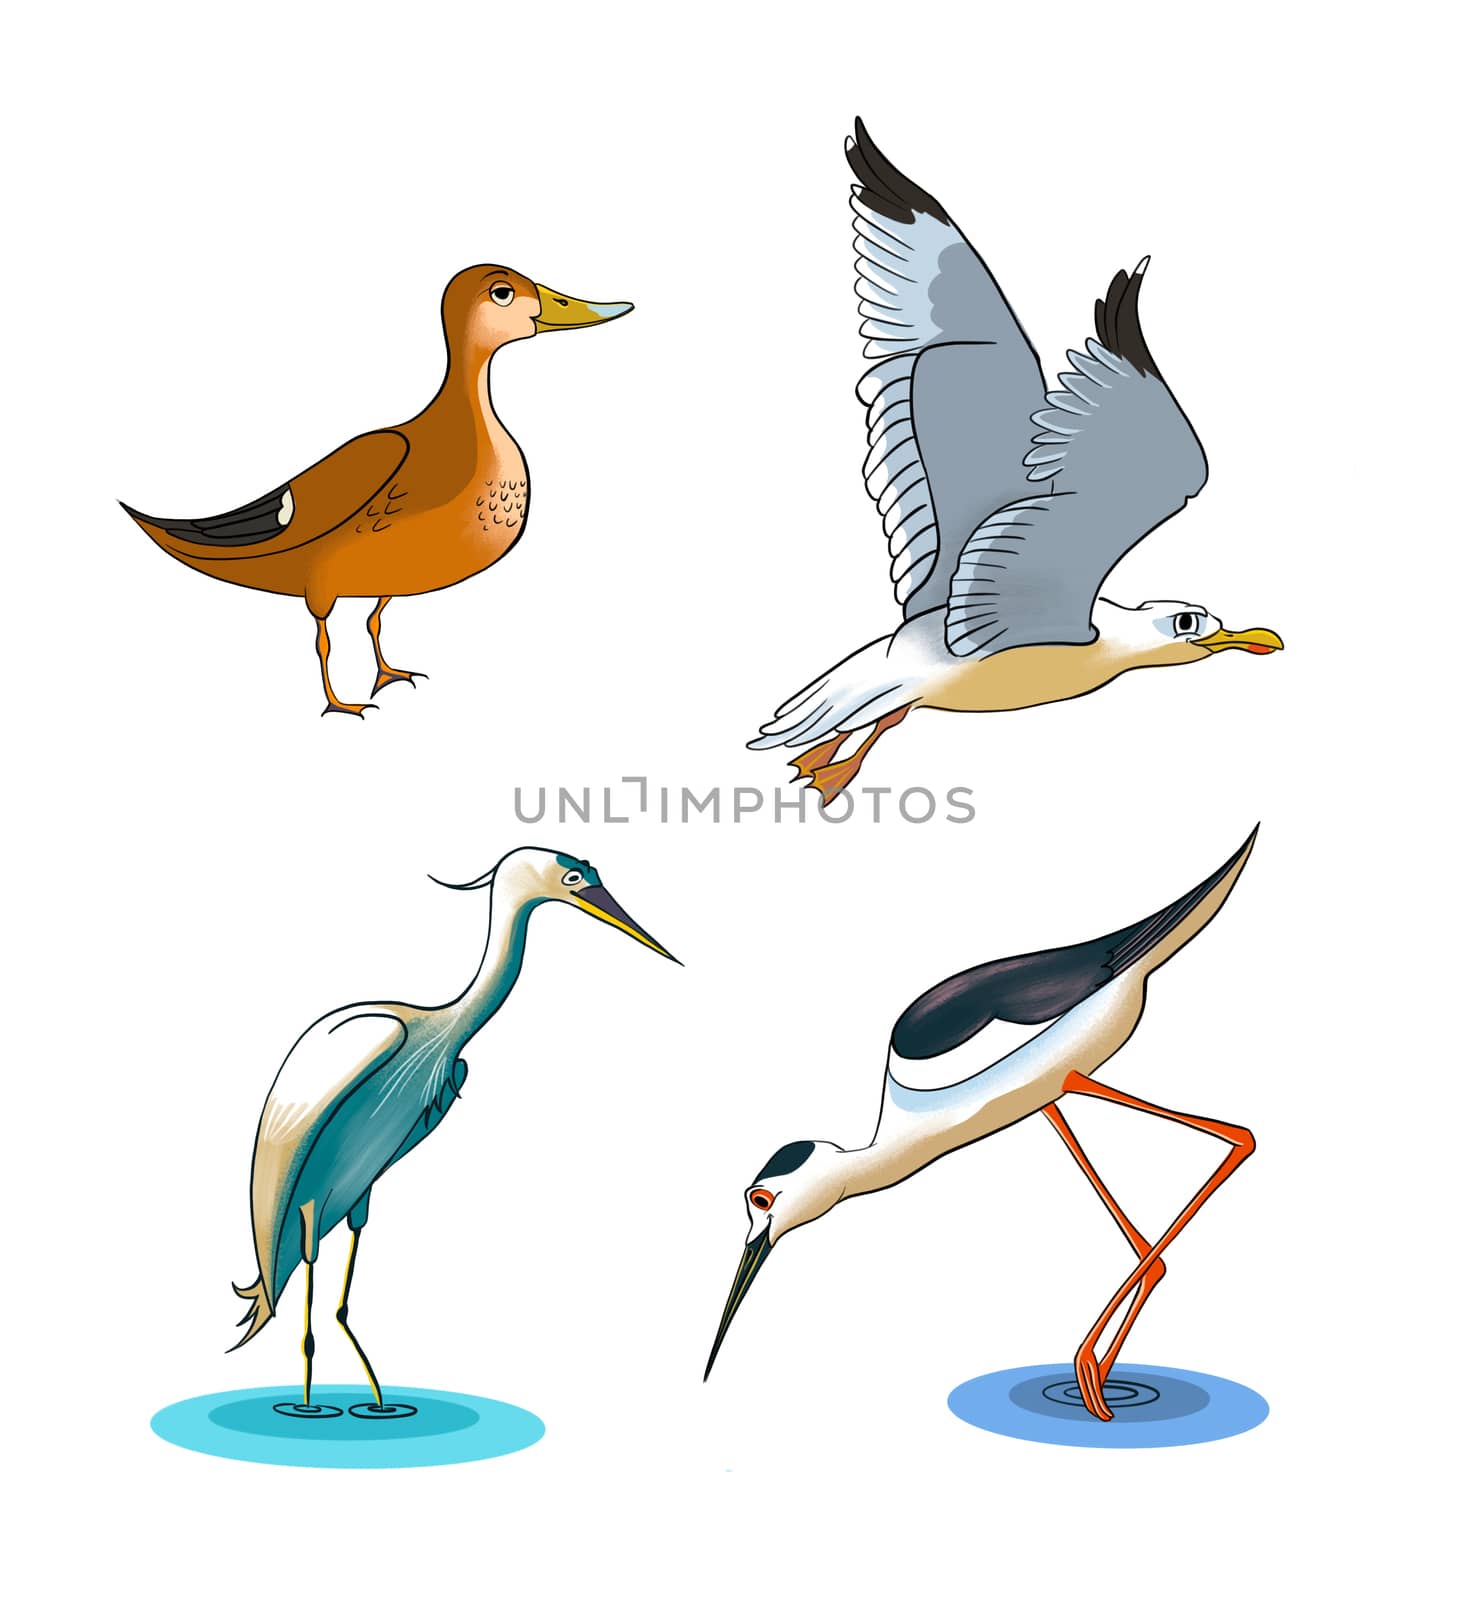 Cartoon drawing of some wetlands birds by Andreus